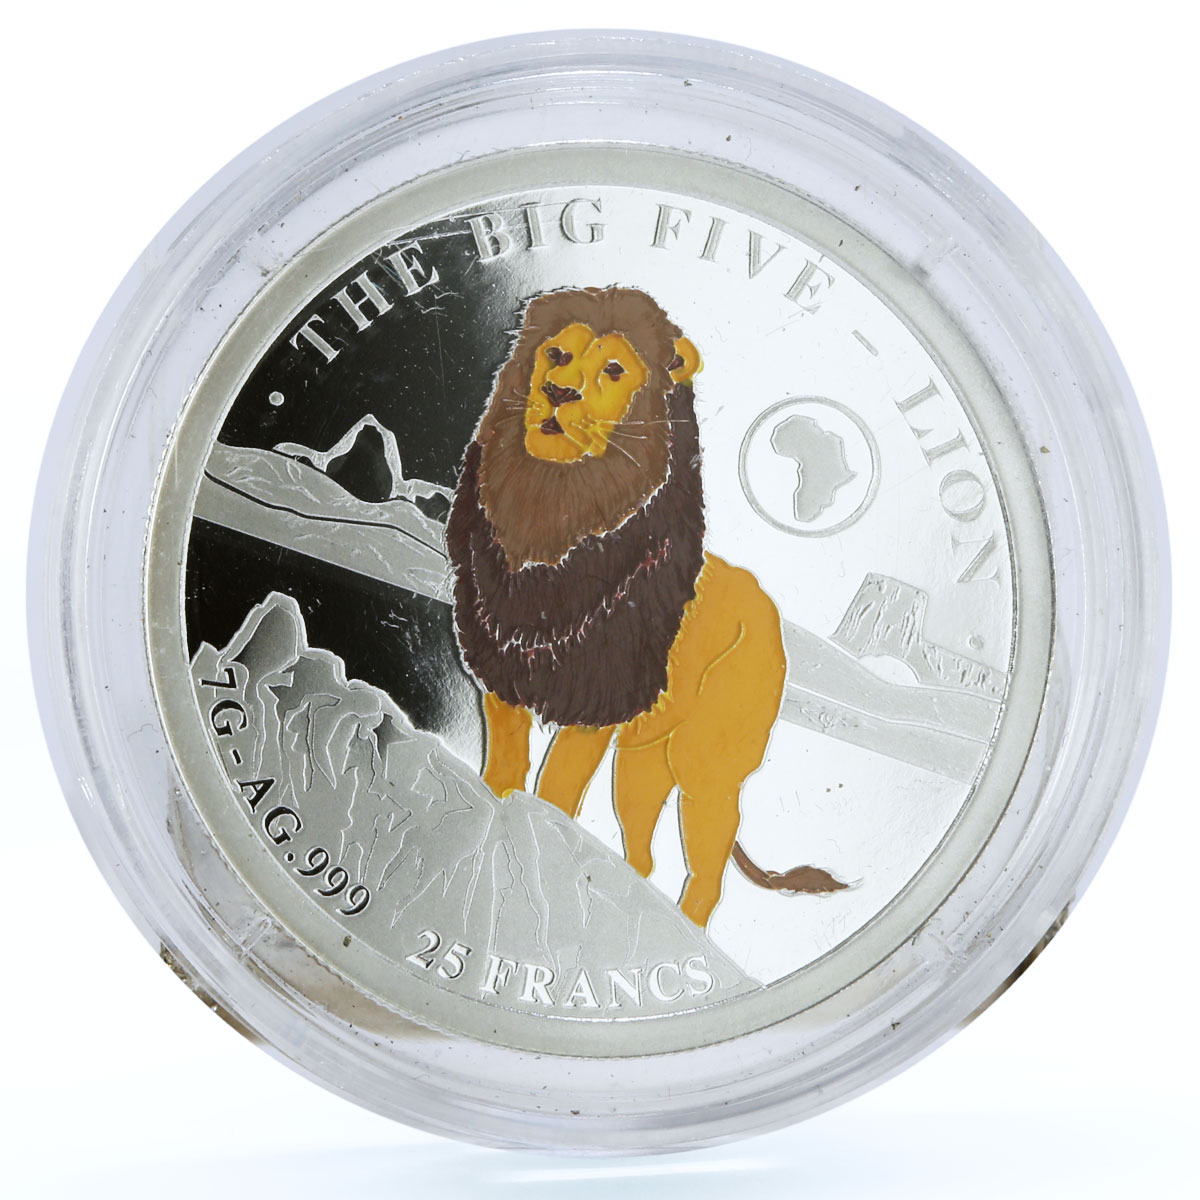 Burundi 25 francs African Big Five Lion Animals Fauna colored silver coin 2019